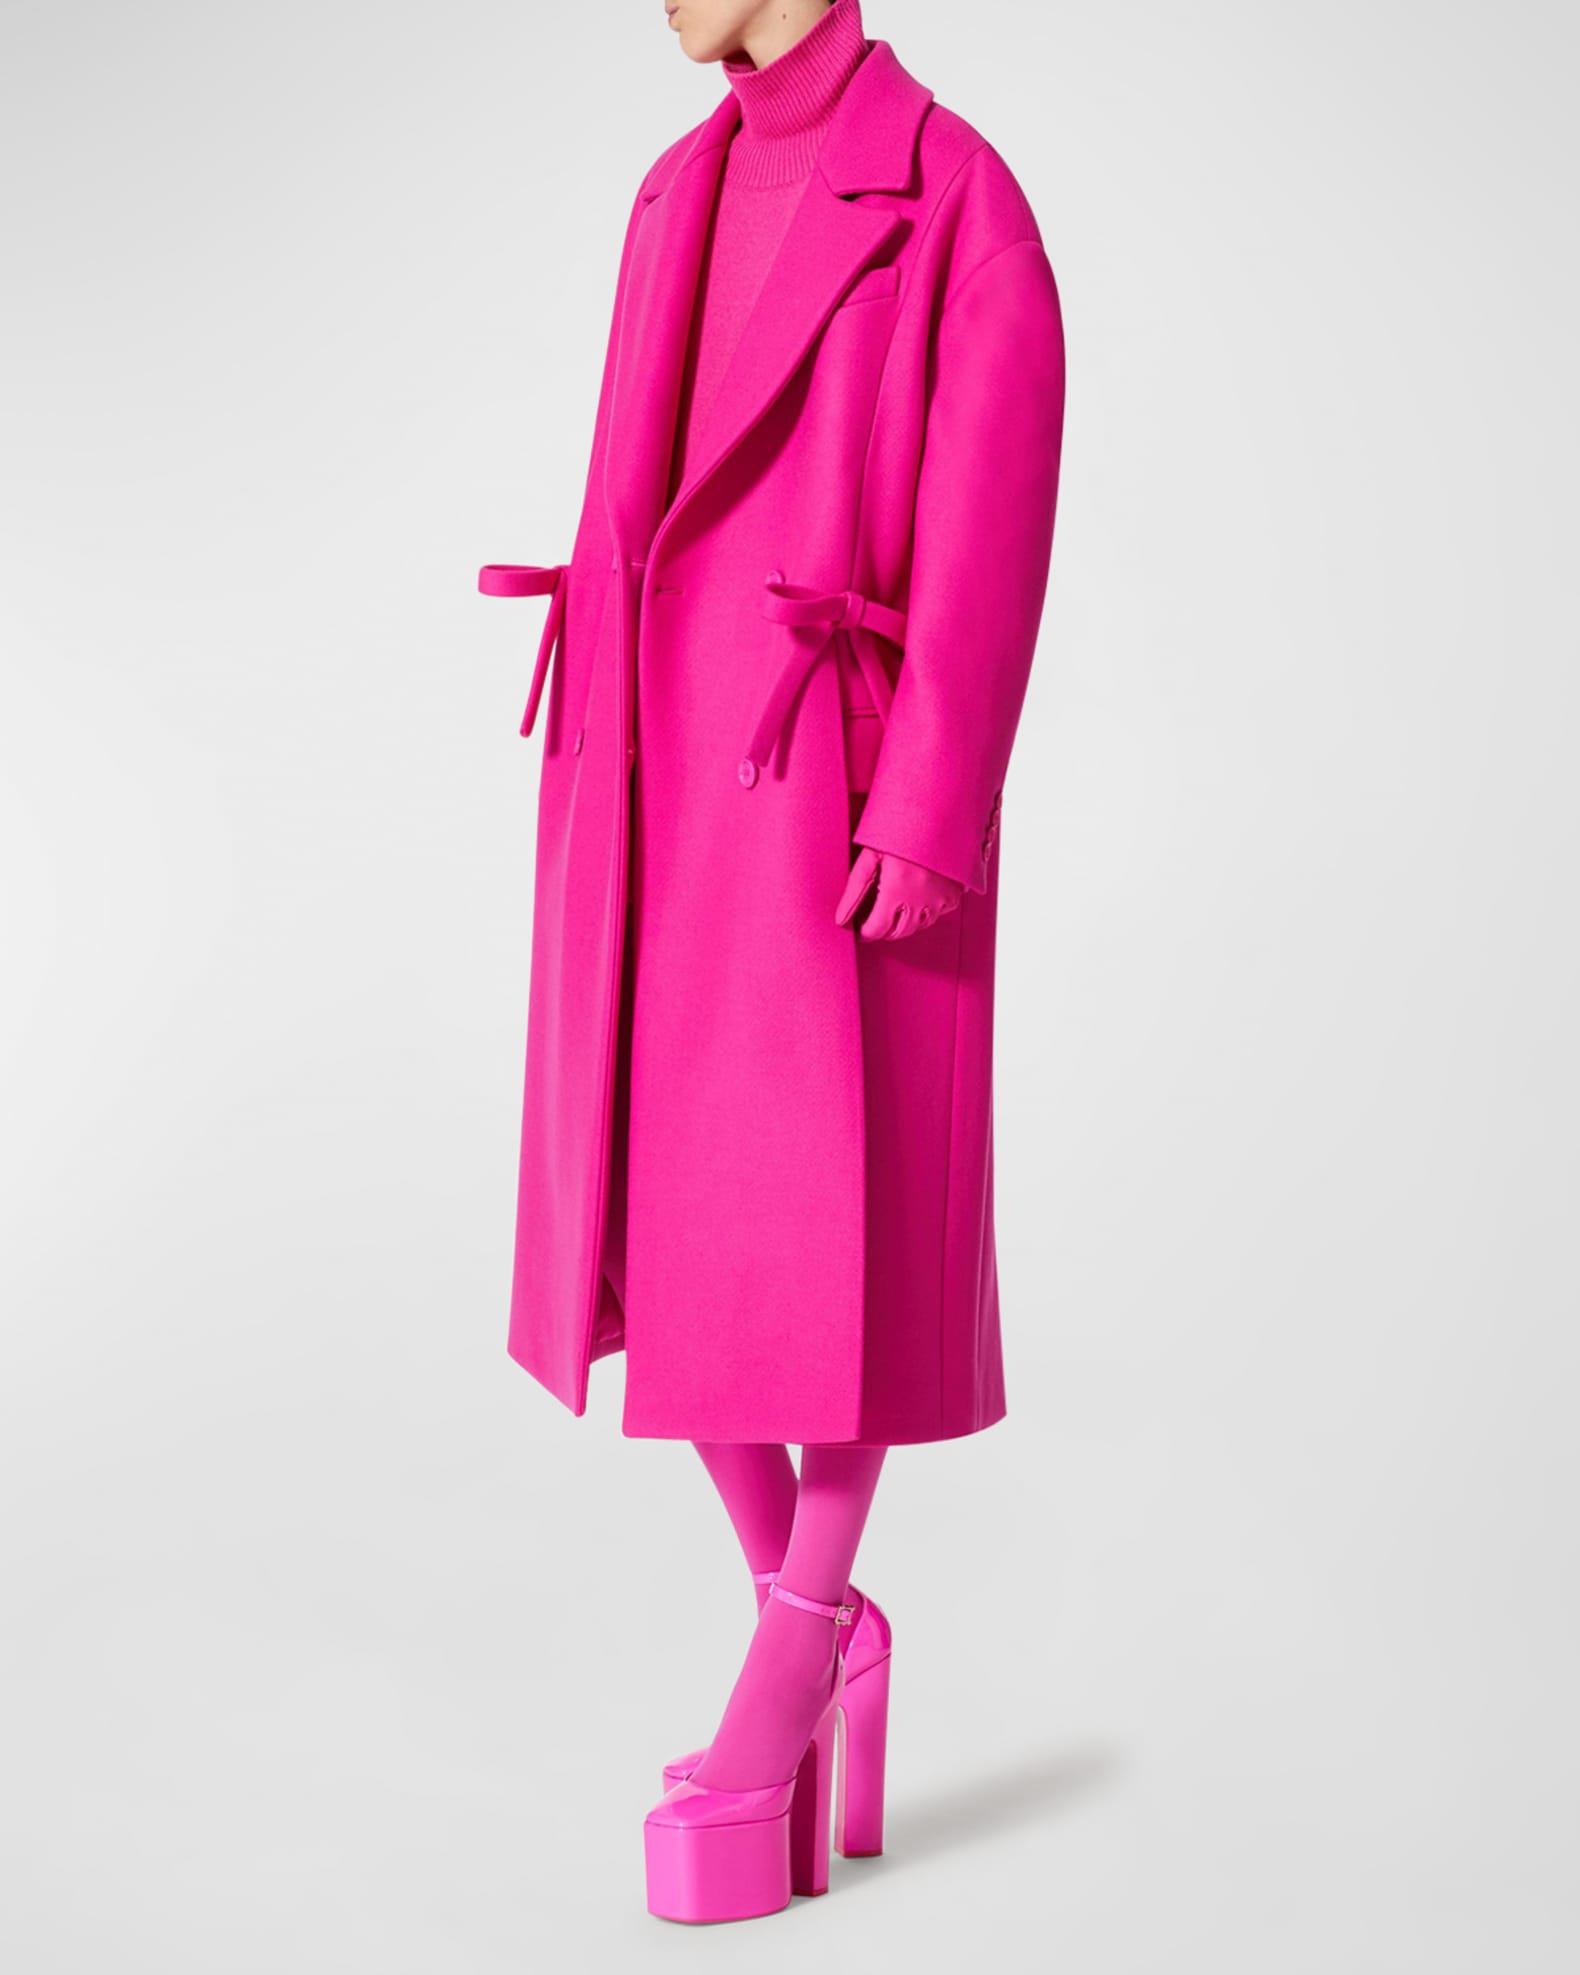 Valentino Garavani Wool Coat w/ Bow Details | Neiman Marcus